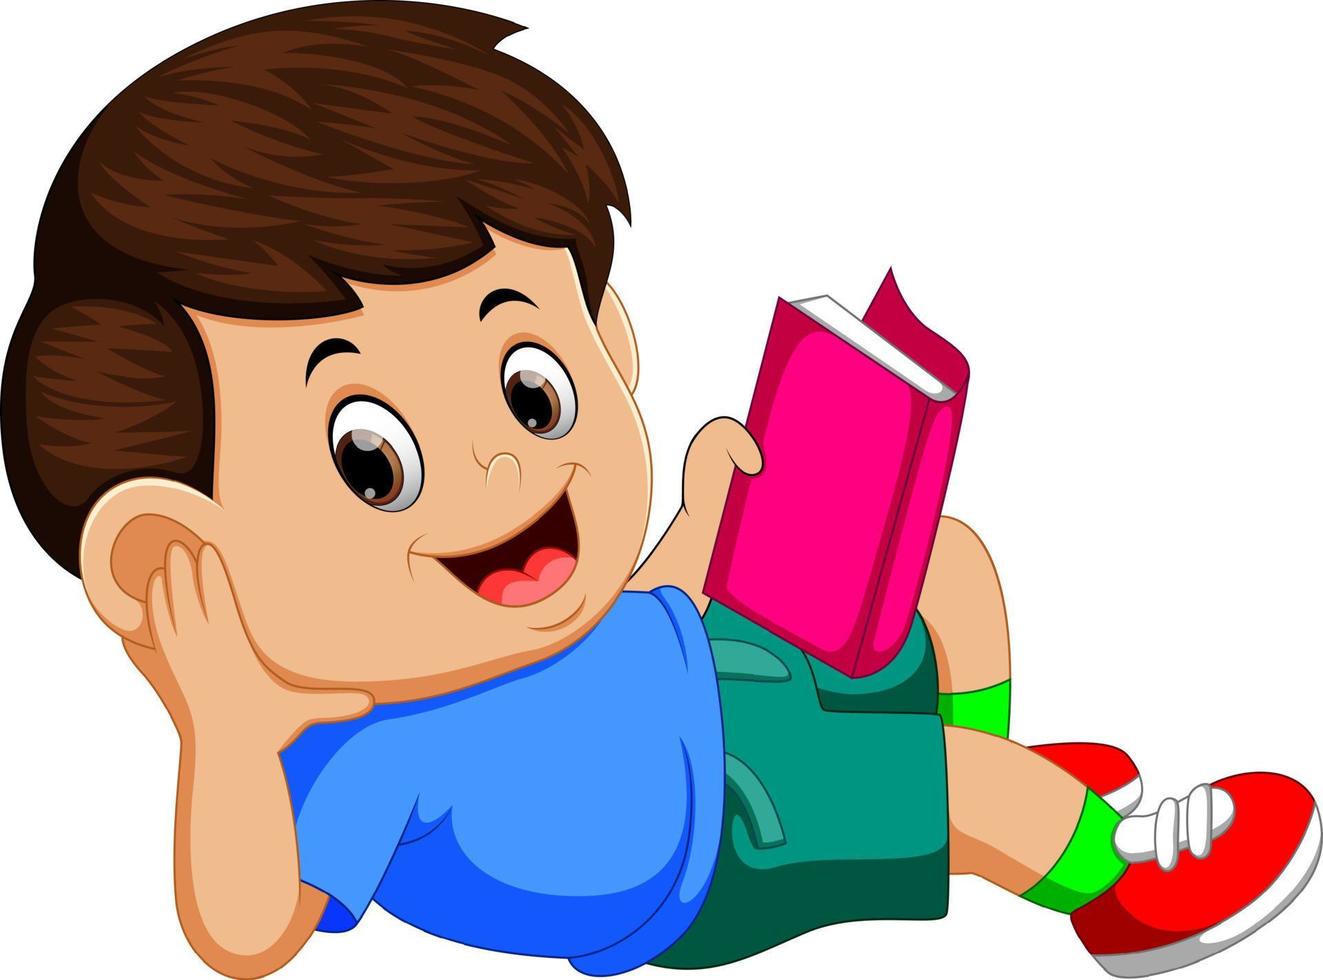 garçon lisant un livre avec plaisir vecteur